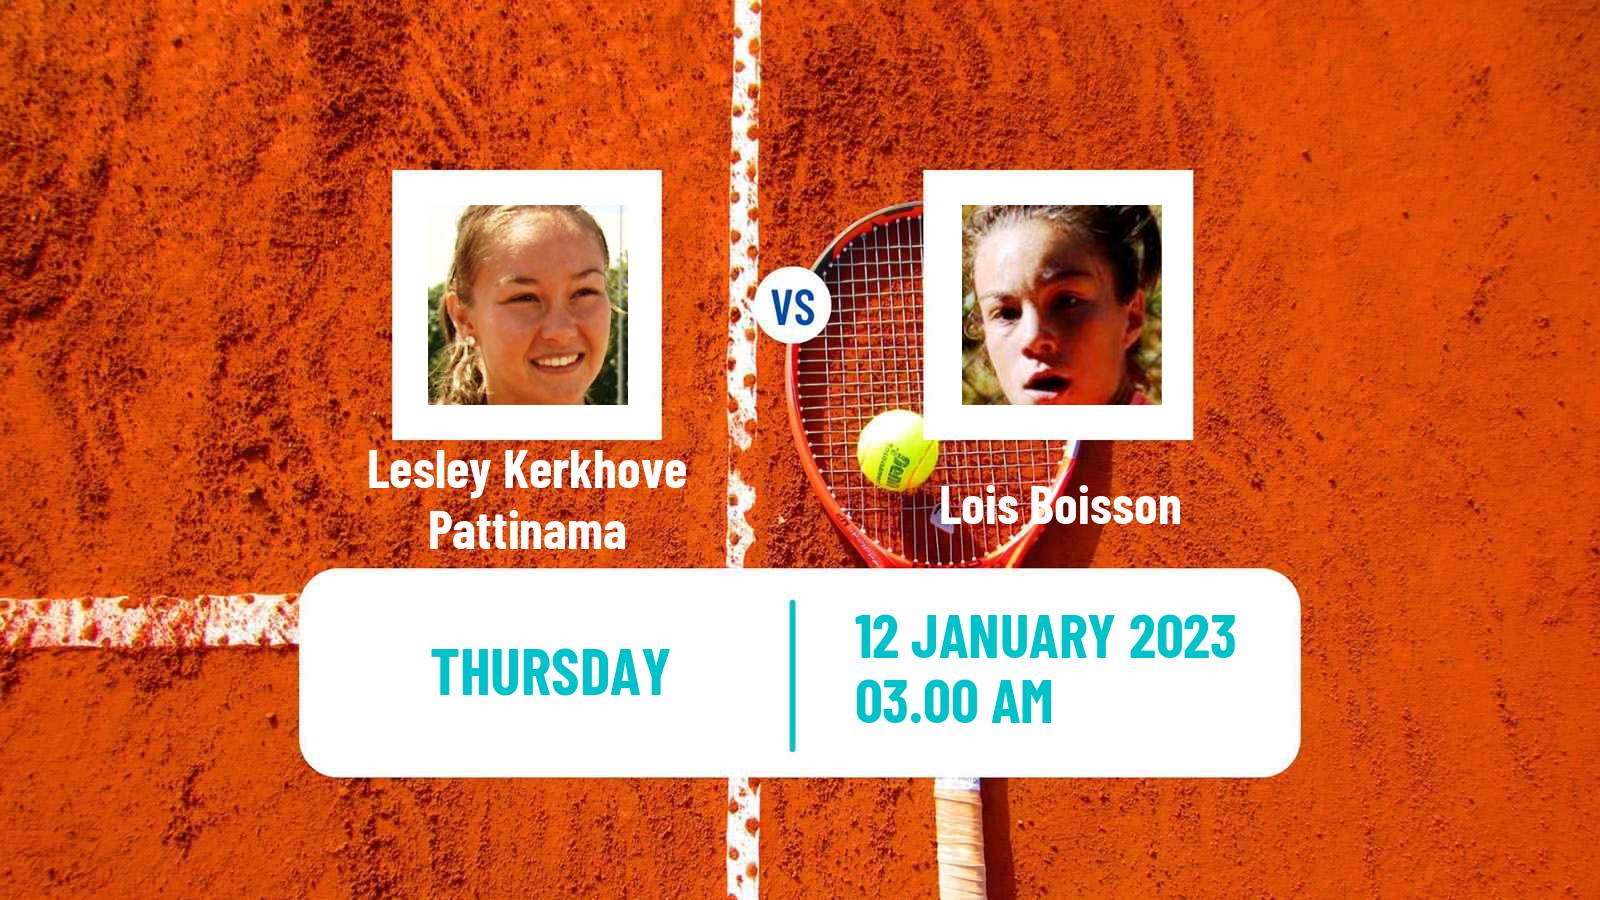 Tennis ITF Tournaments Lesley Kerkhove Pattinama - Lois Boisson